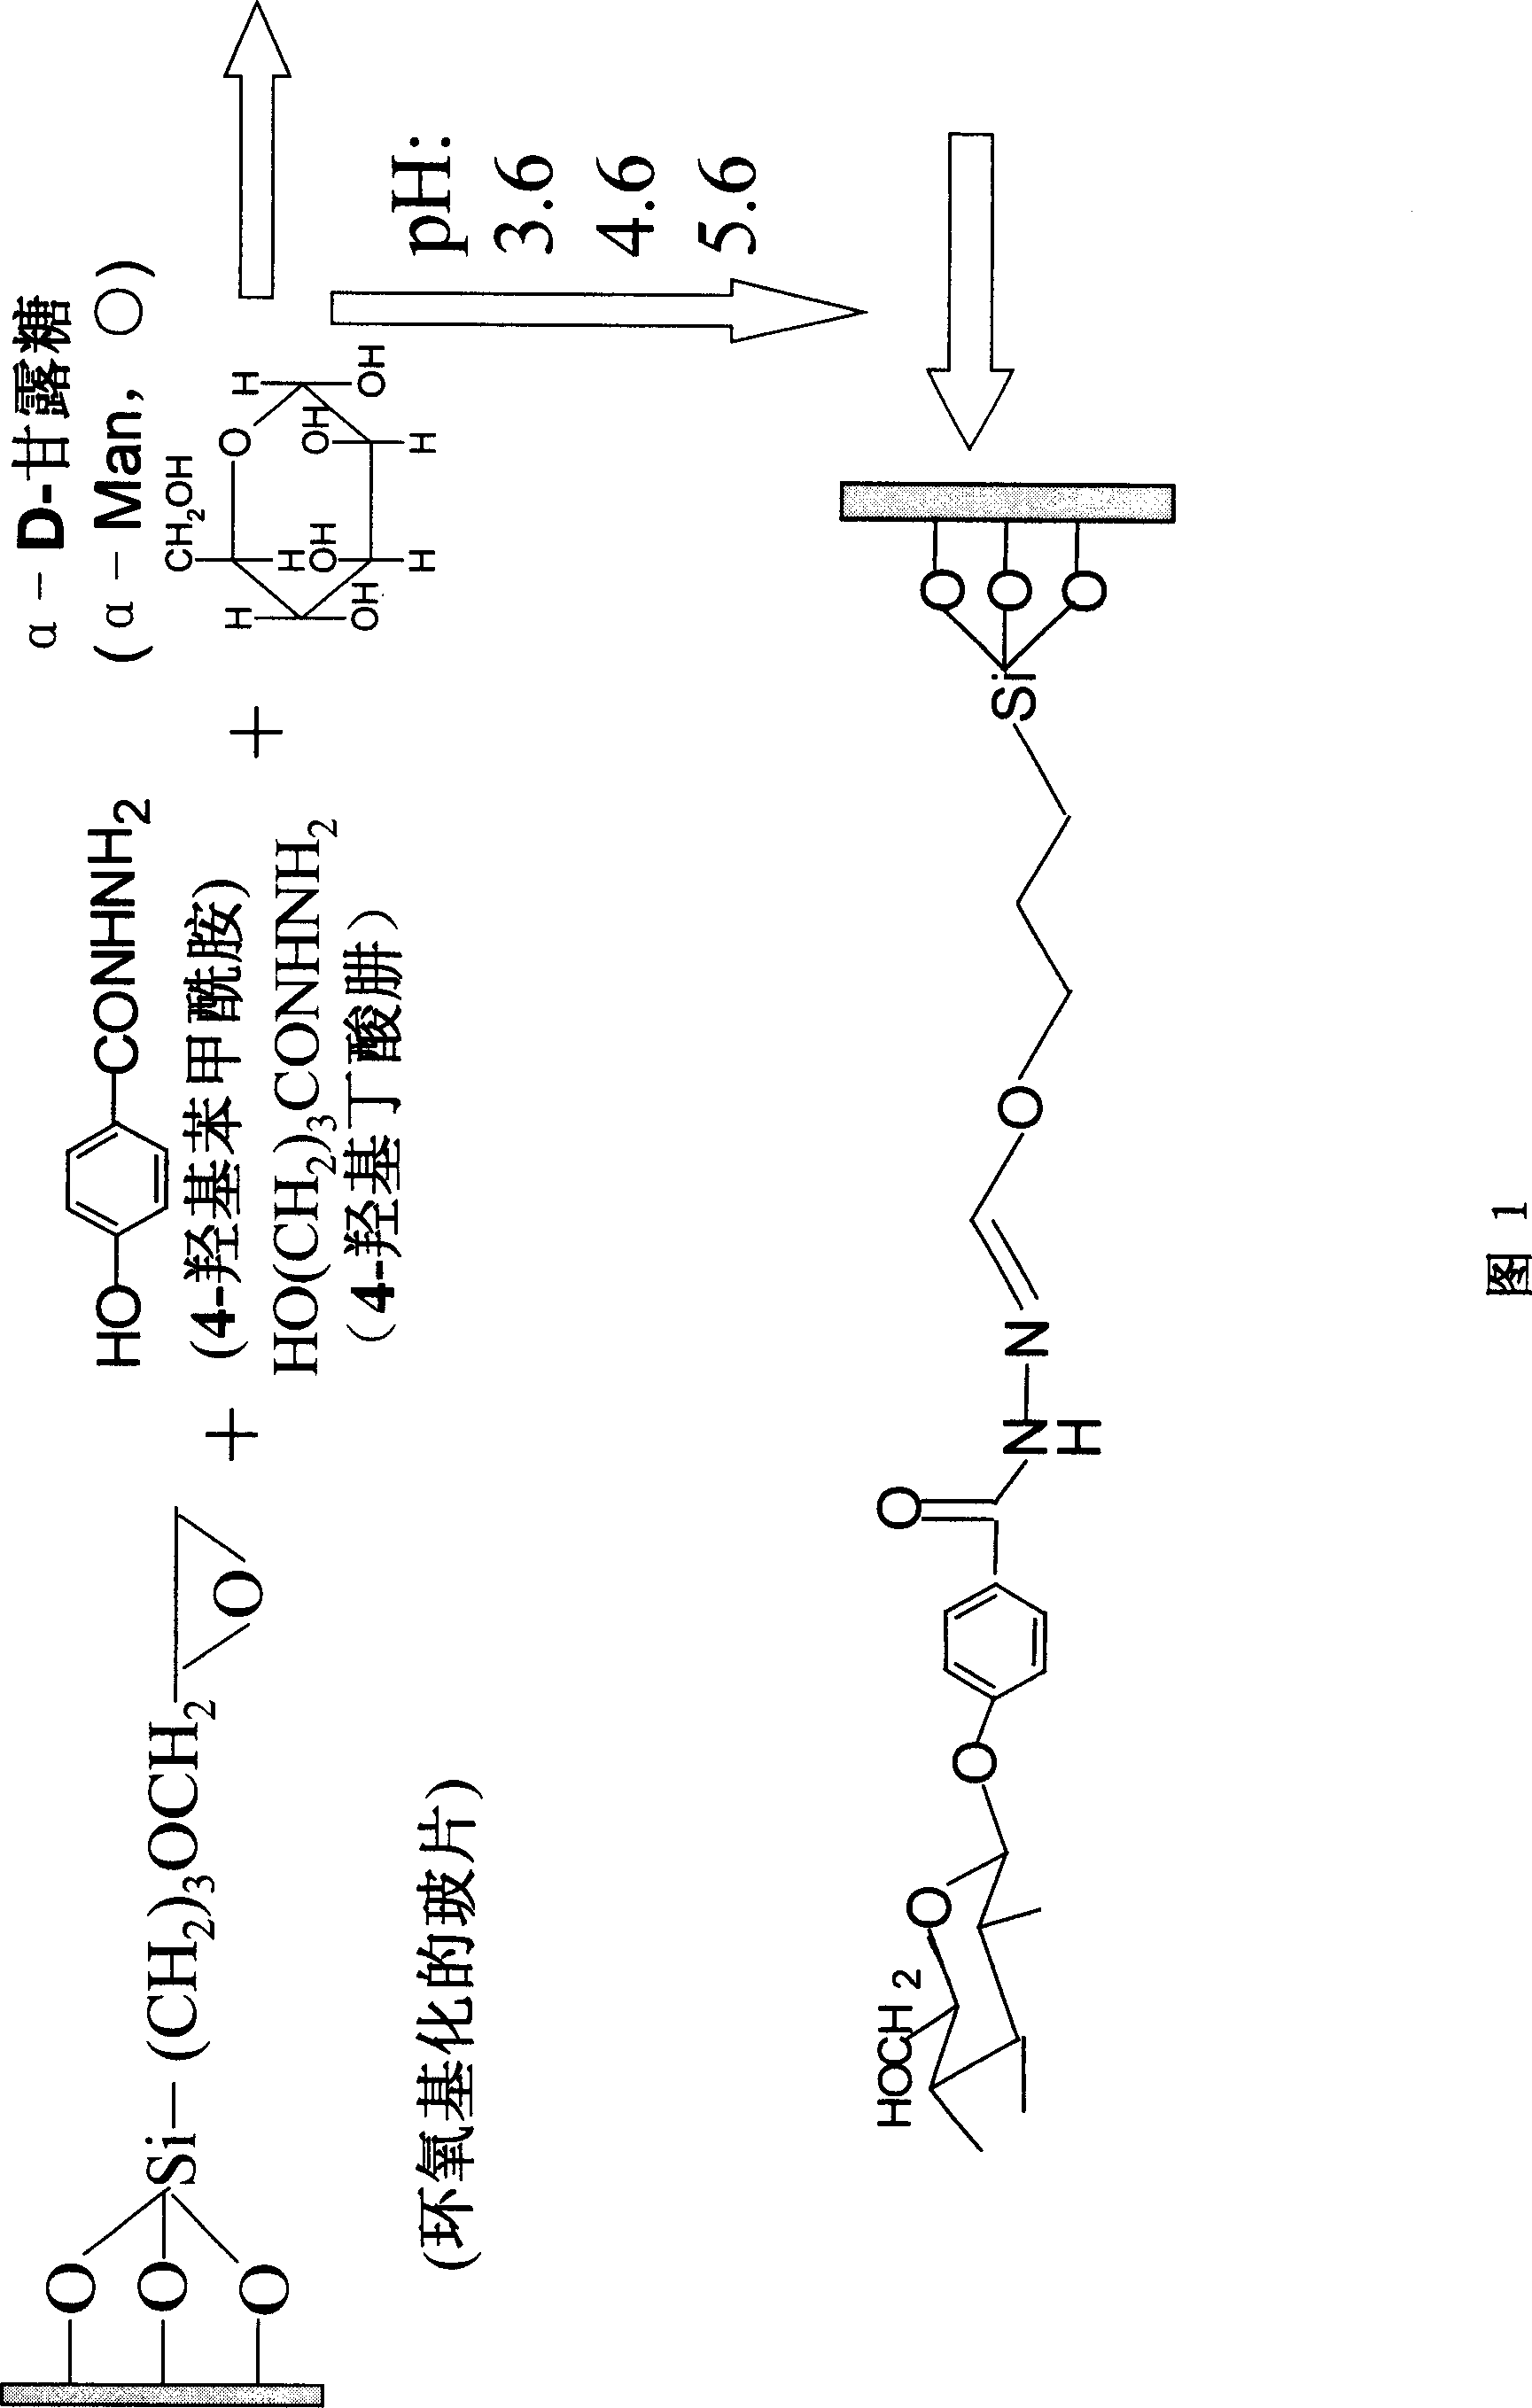 Process of sugar bio-chip